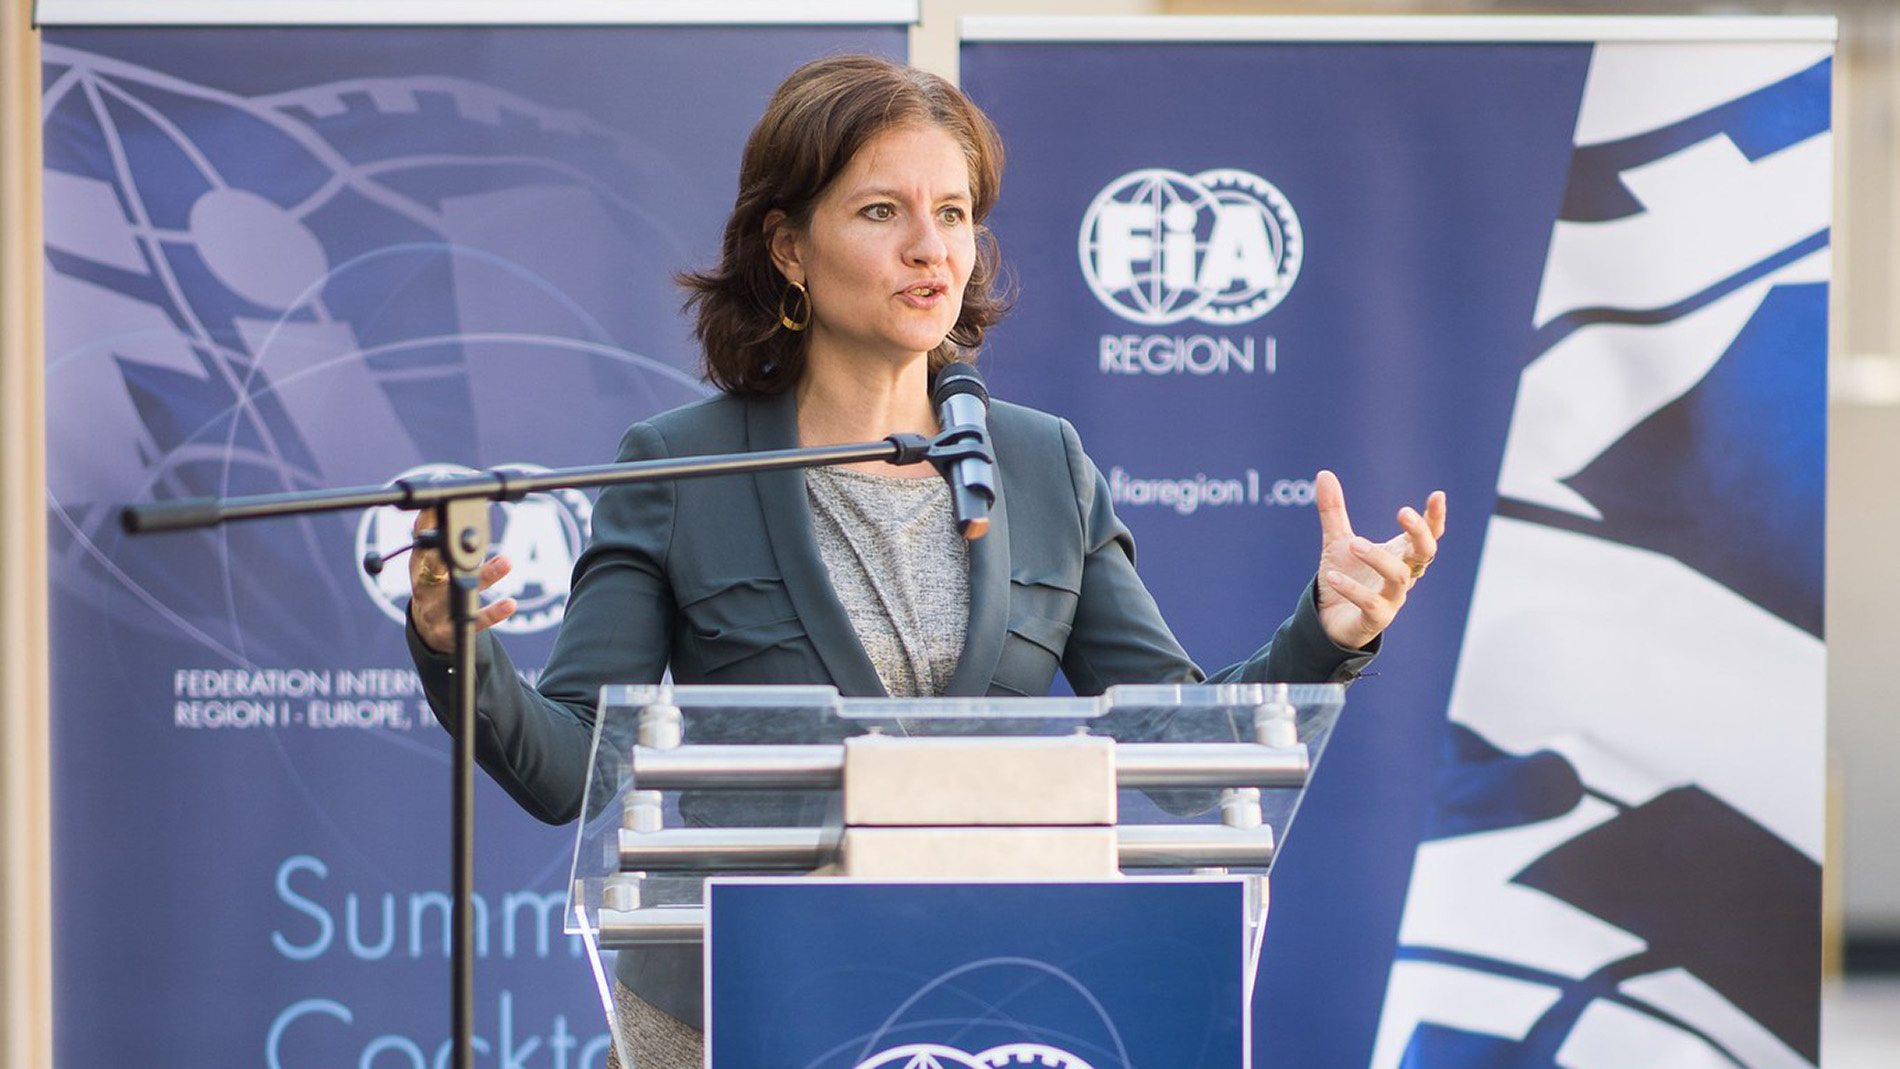 Laurianne Krid, Director General der Fédération Internationale de l’Automobile (FIA) Region I